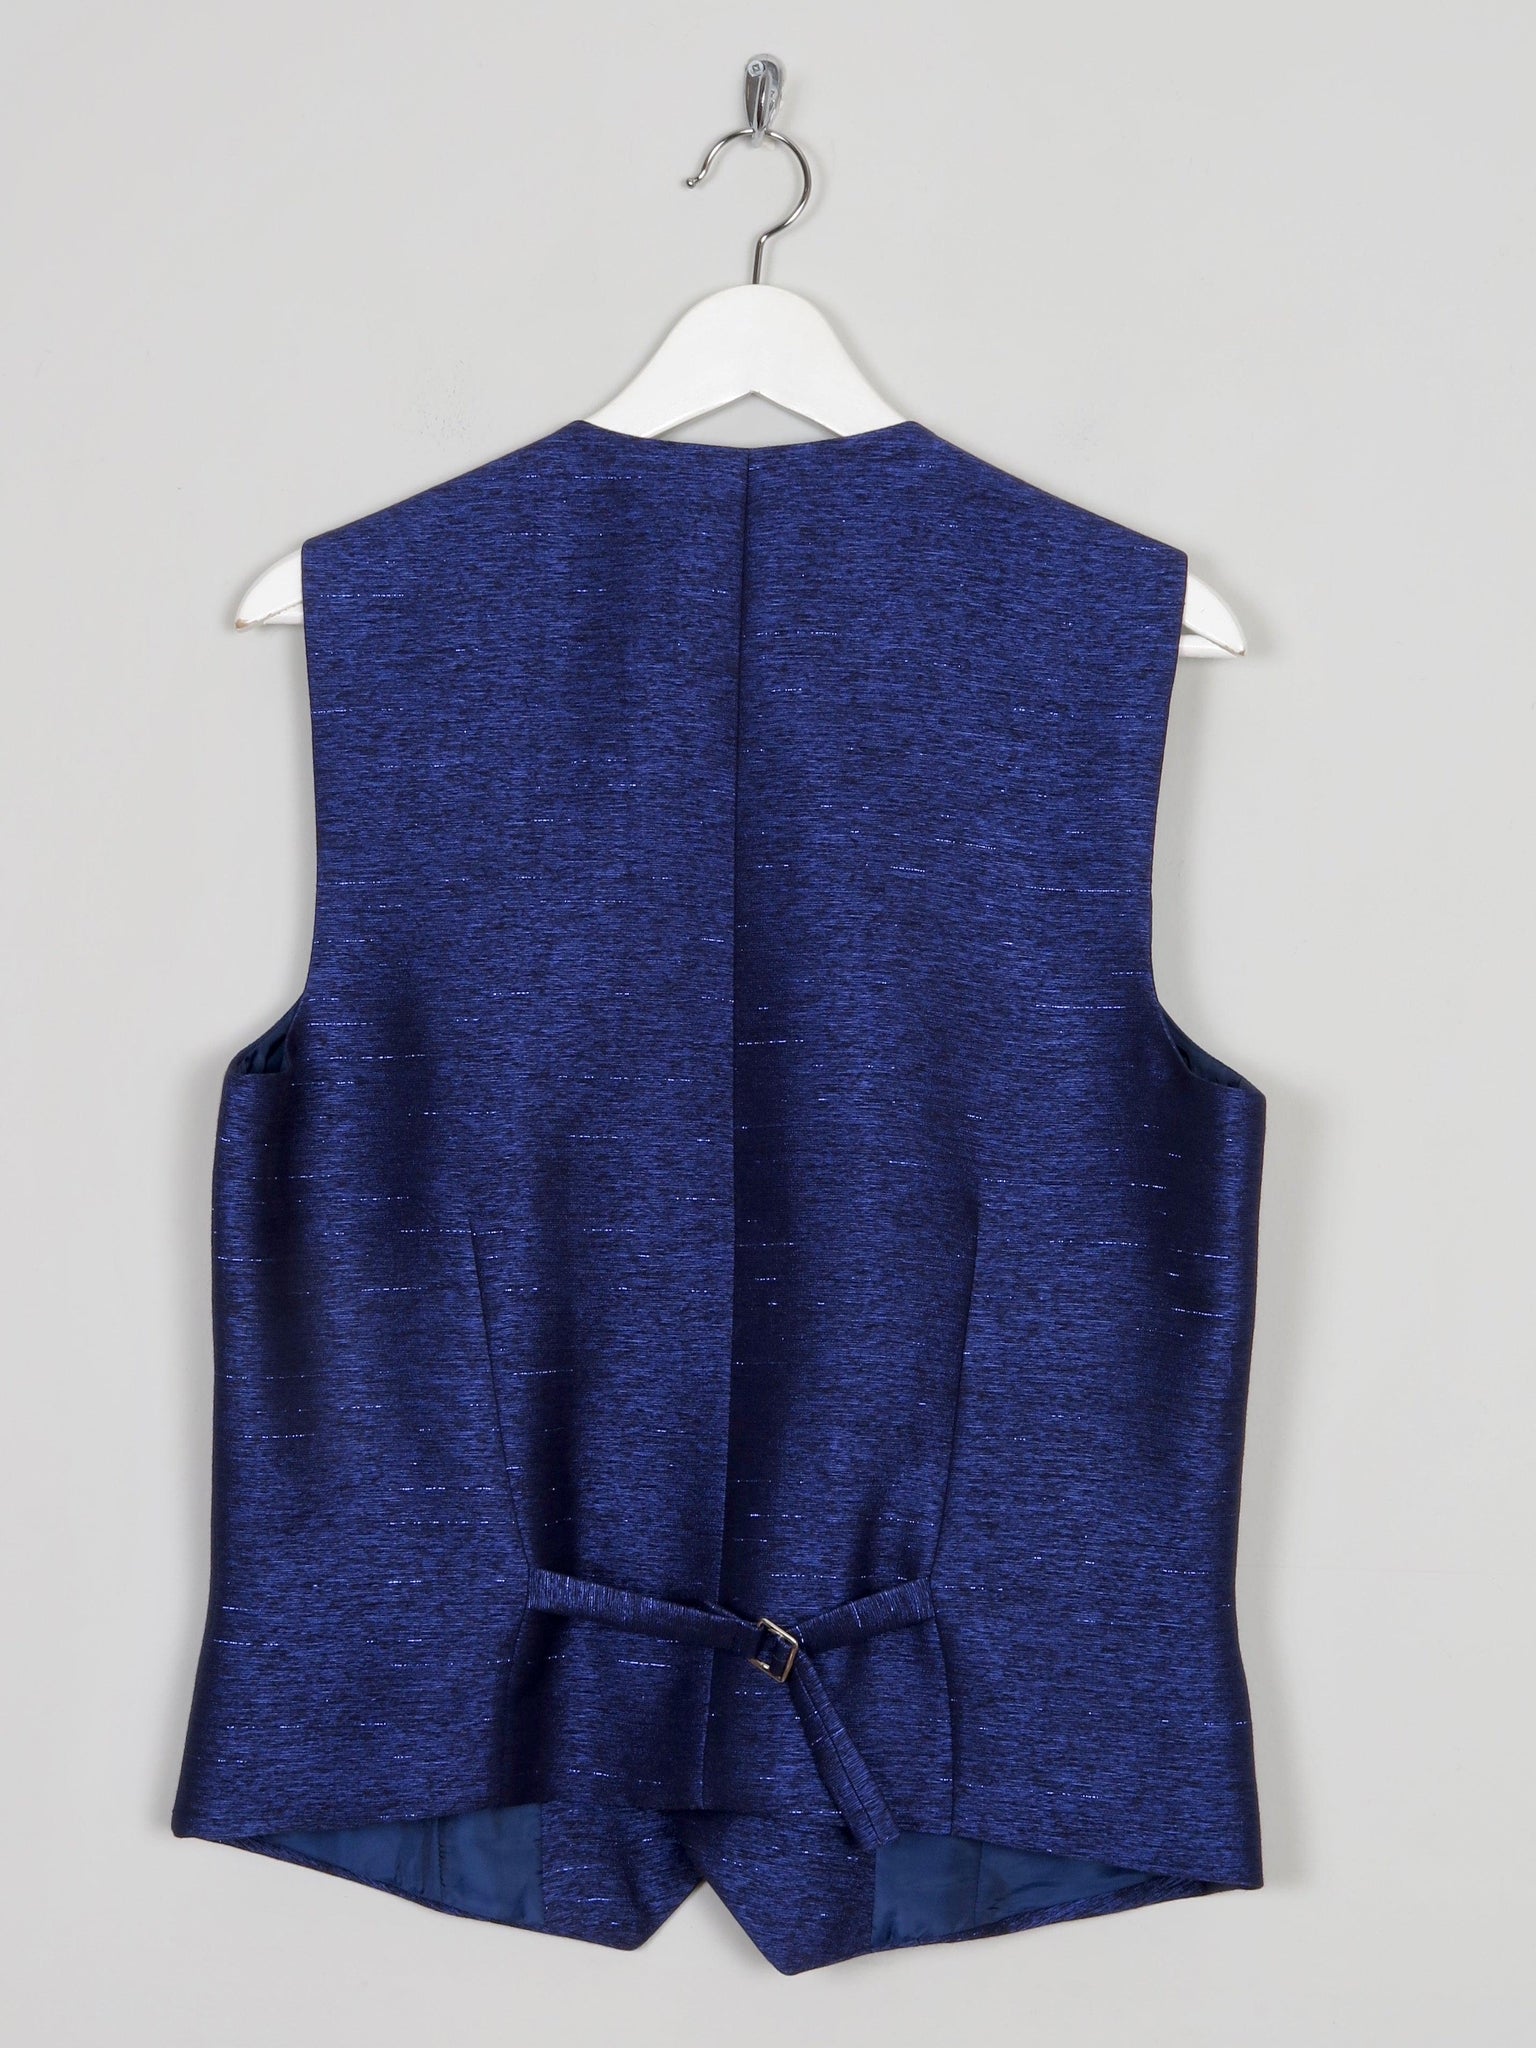 Men's Electric Blue Lurex Waistcoat 38/40 S/M - The Harlequin